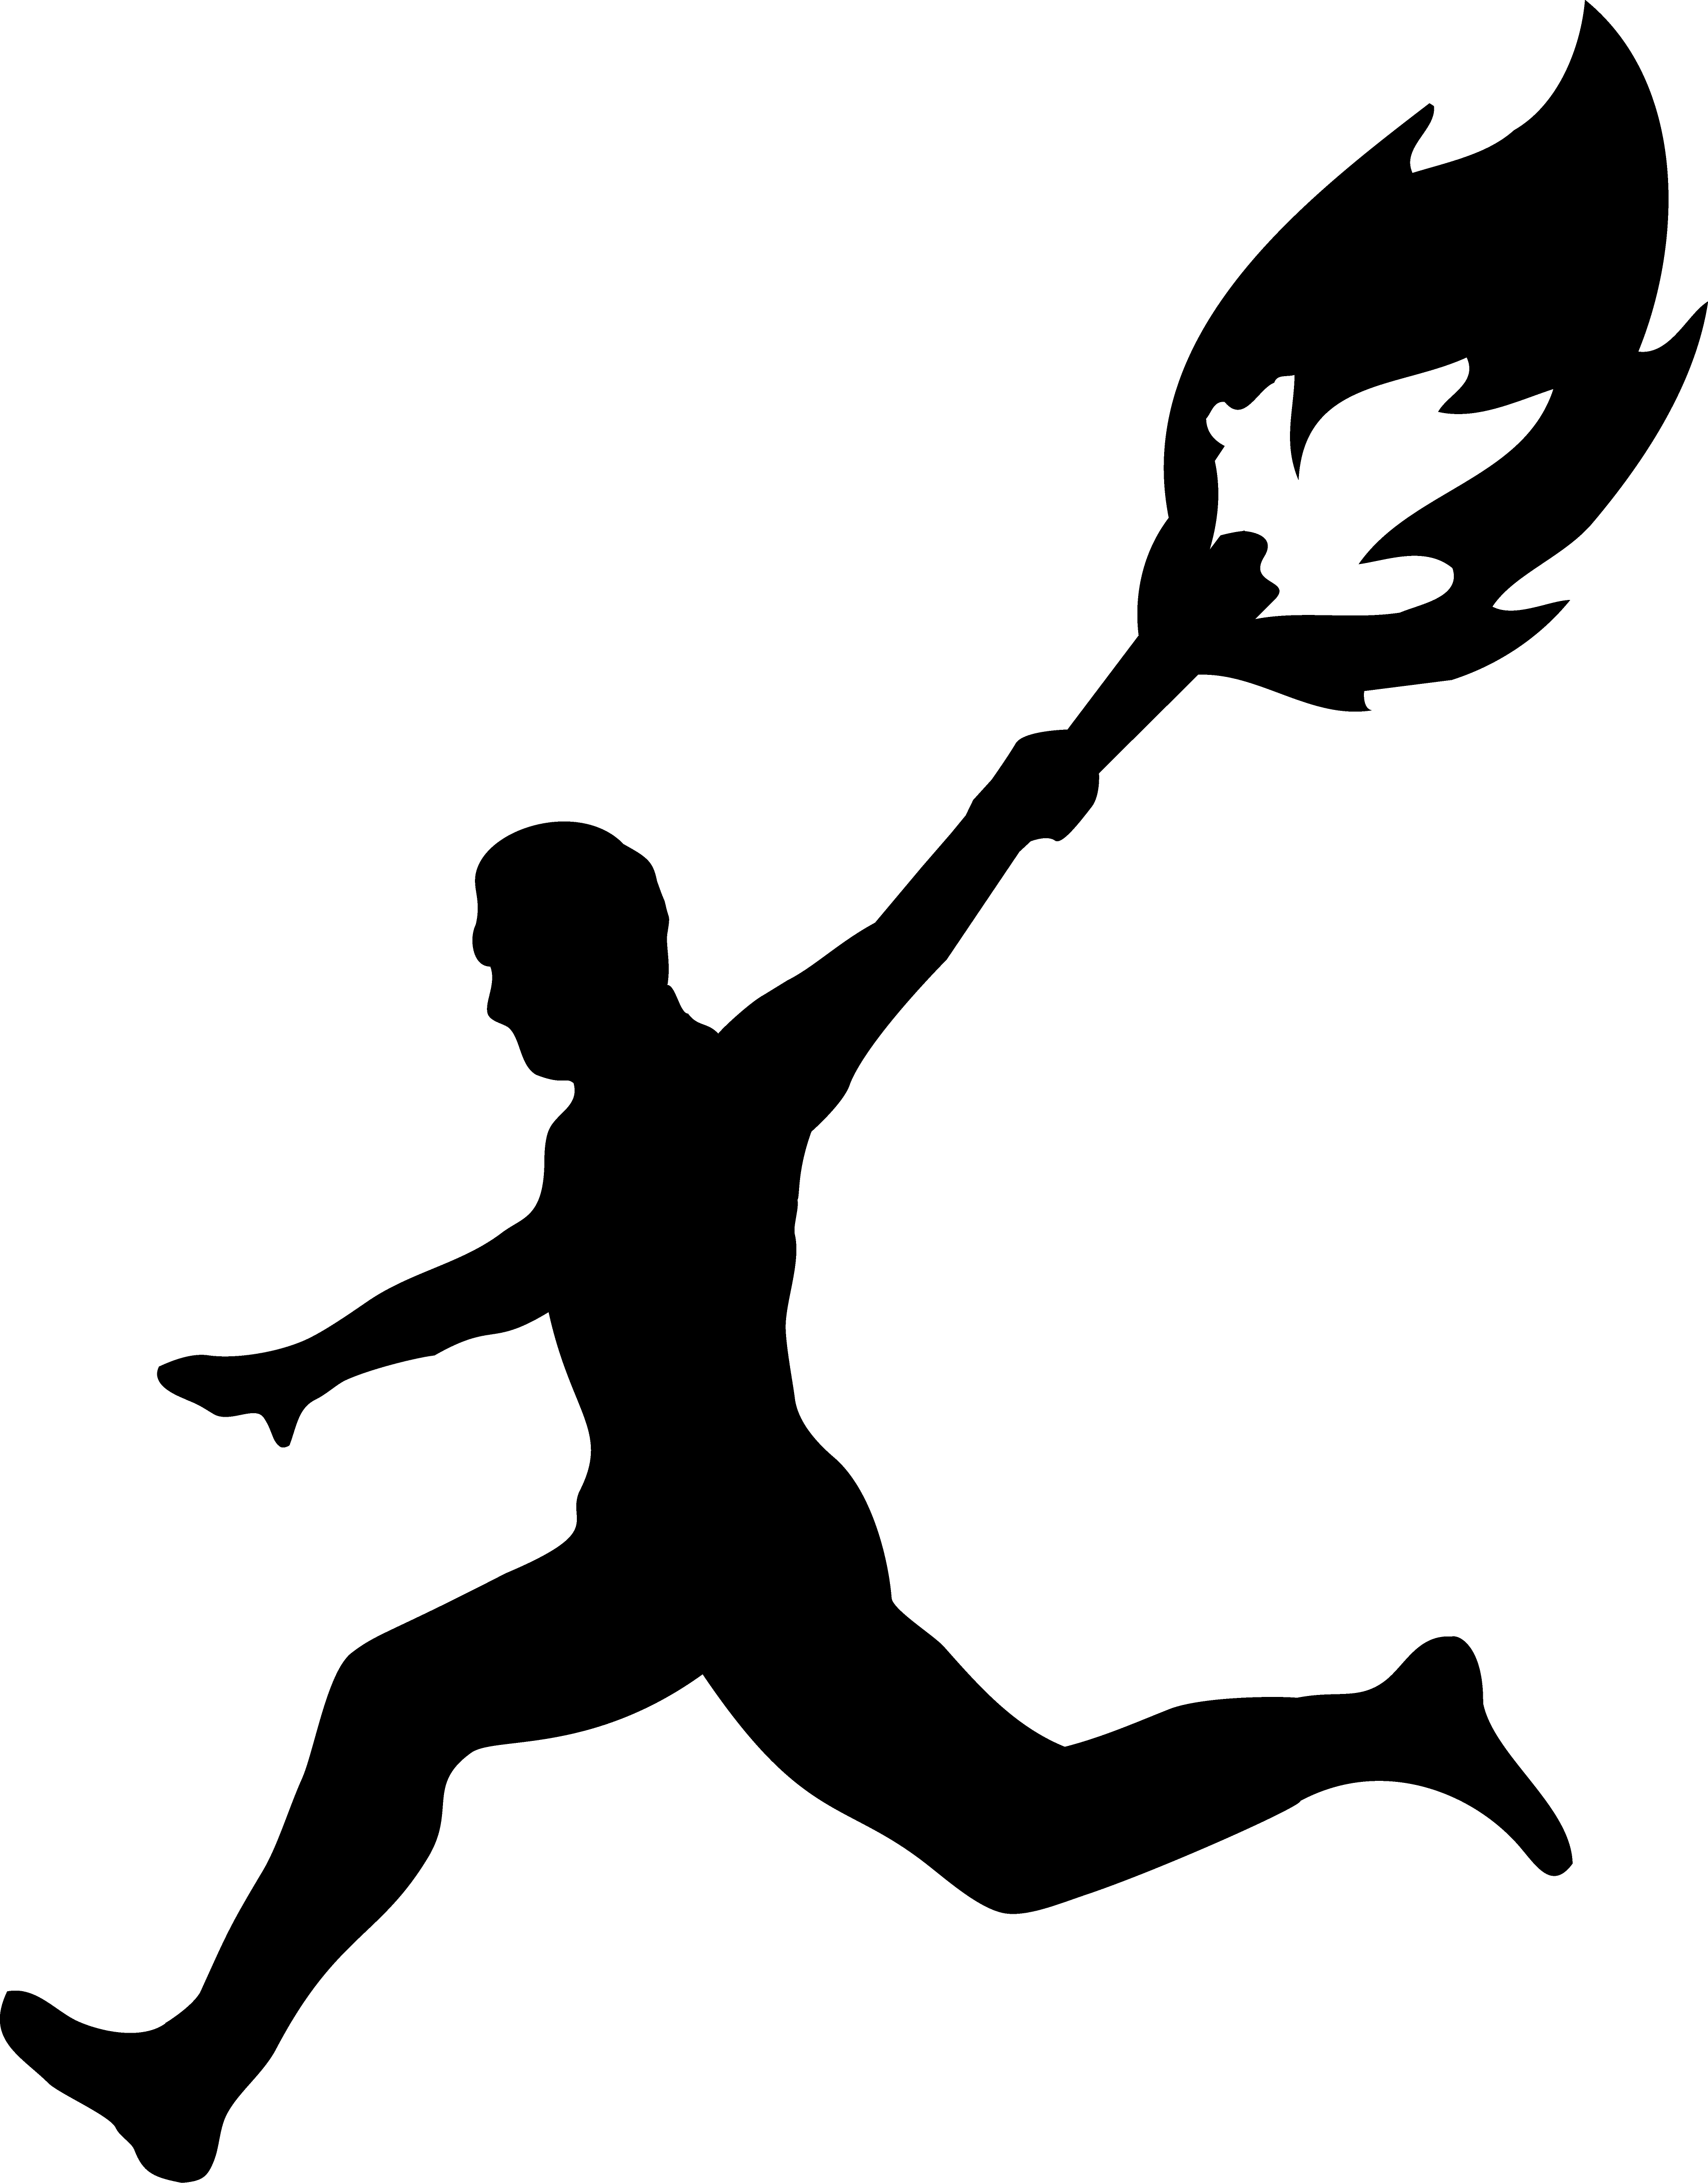 Person Running Logo - Torch Man. Free Image clip art online